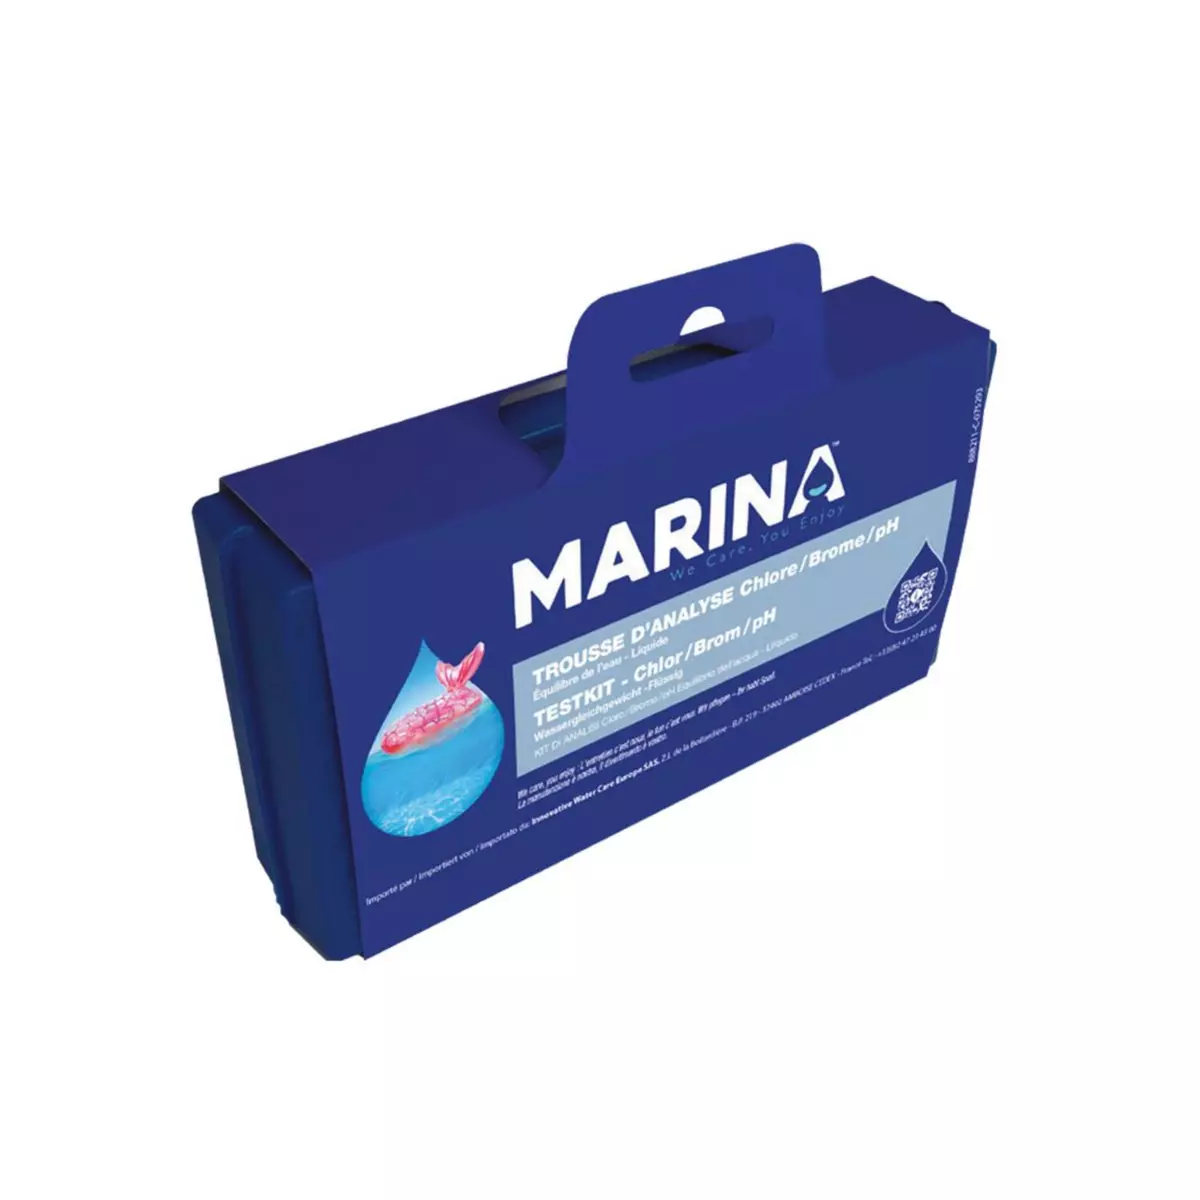 MARINA Trousse d'analyse eau piscine Chlore/Brome/pH - Marina